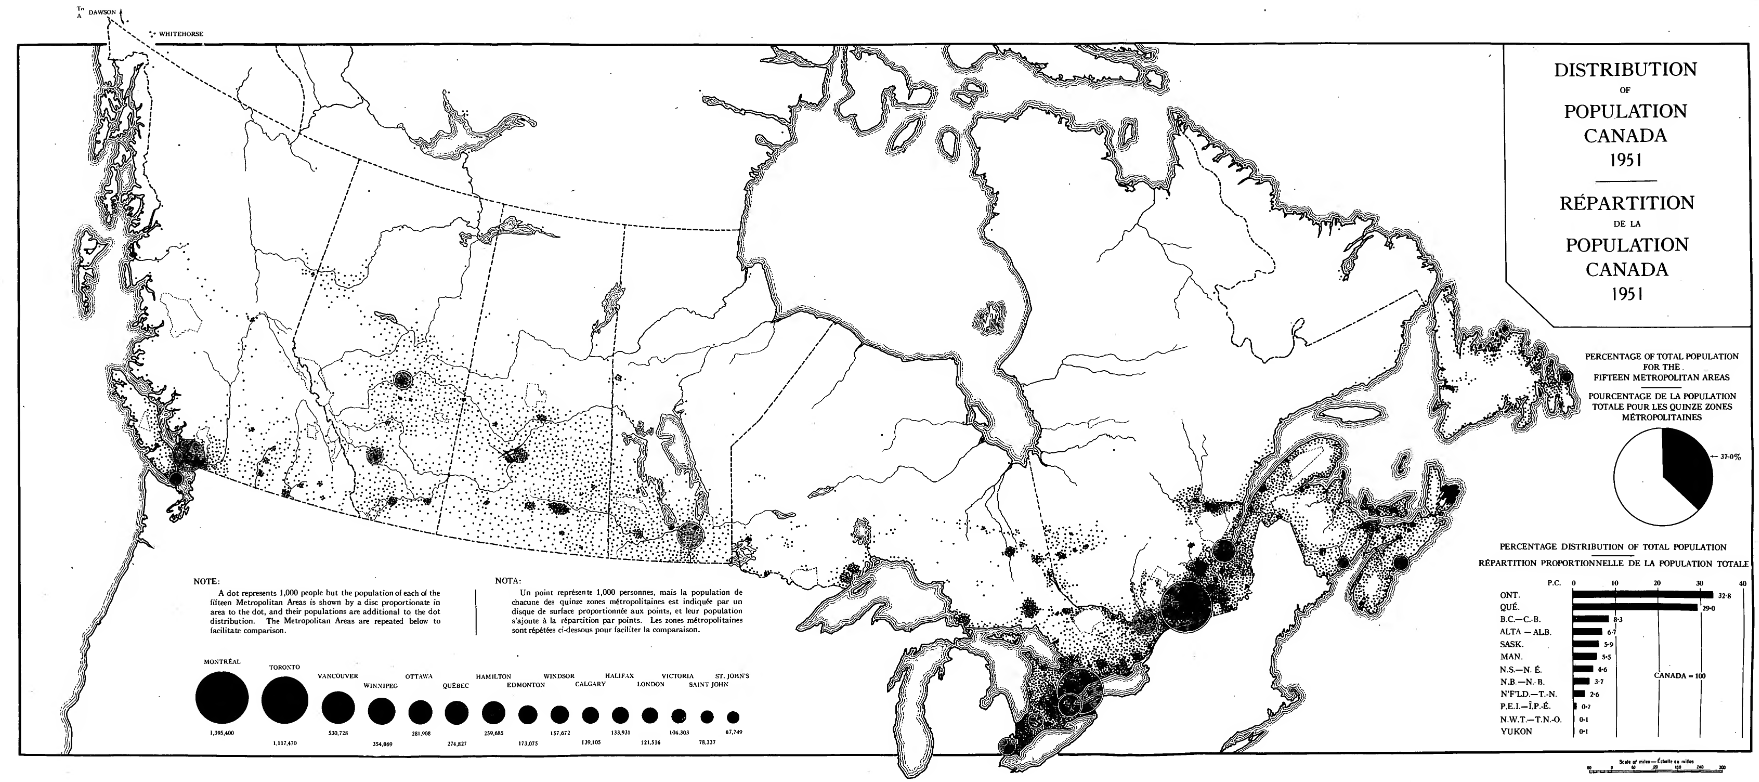 Ninth Census of Canada 1951, Population Distribution. Dominion of Bureau Statistics, Public Domain.